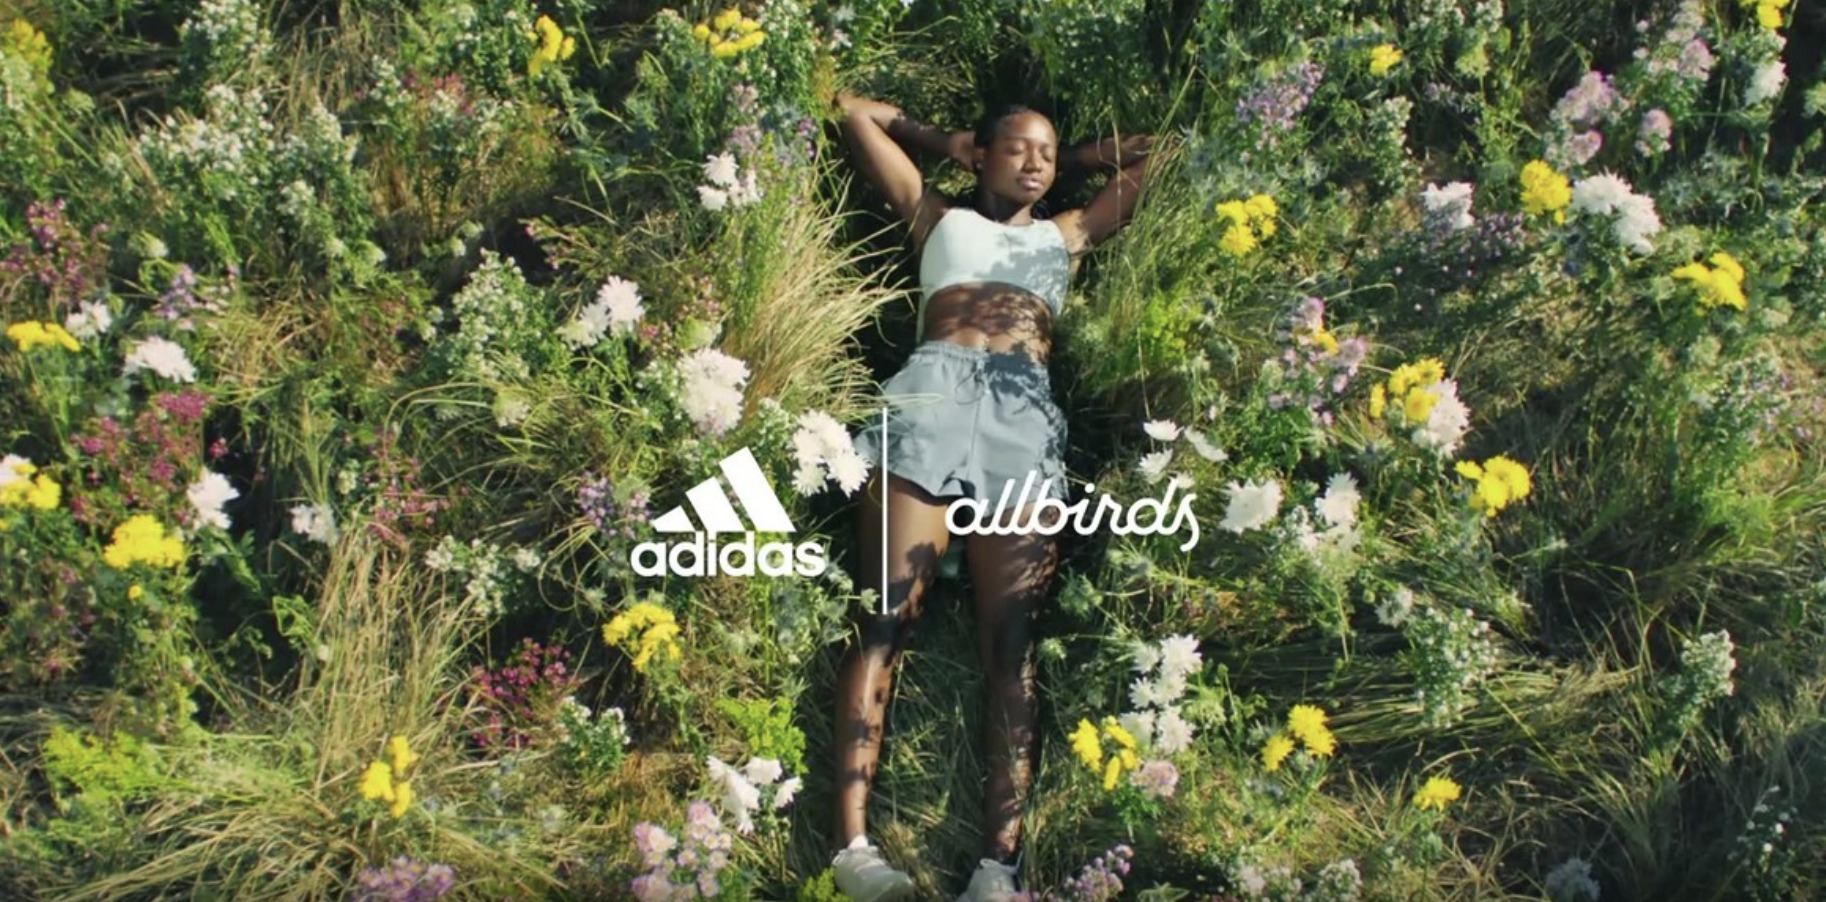 Adidas x Allbirds – a collaboration of kaitiakitanga